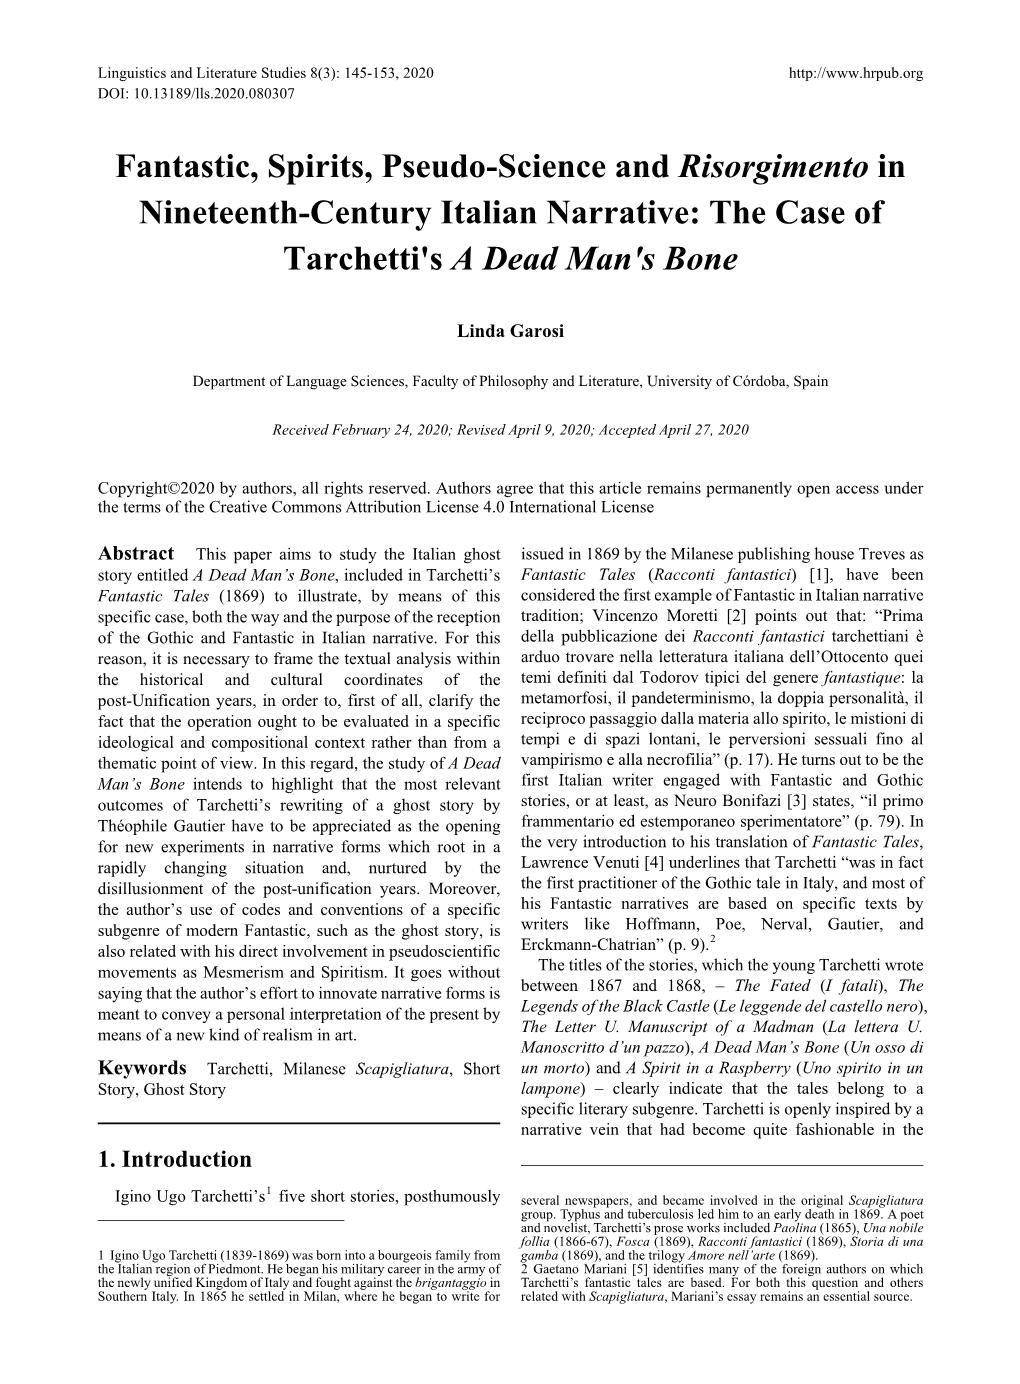 Fantastic, Spirits, Pseudo-Science and Risorgimento in Nineteenth-Century Italian Narrative: the Case of Tarchetti's a Dead Man's Bone